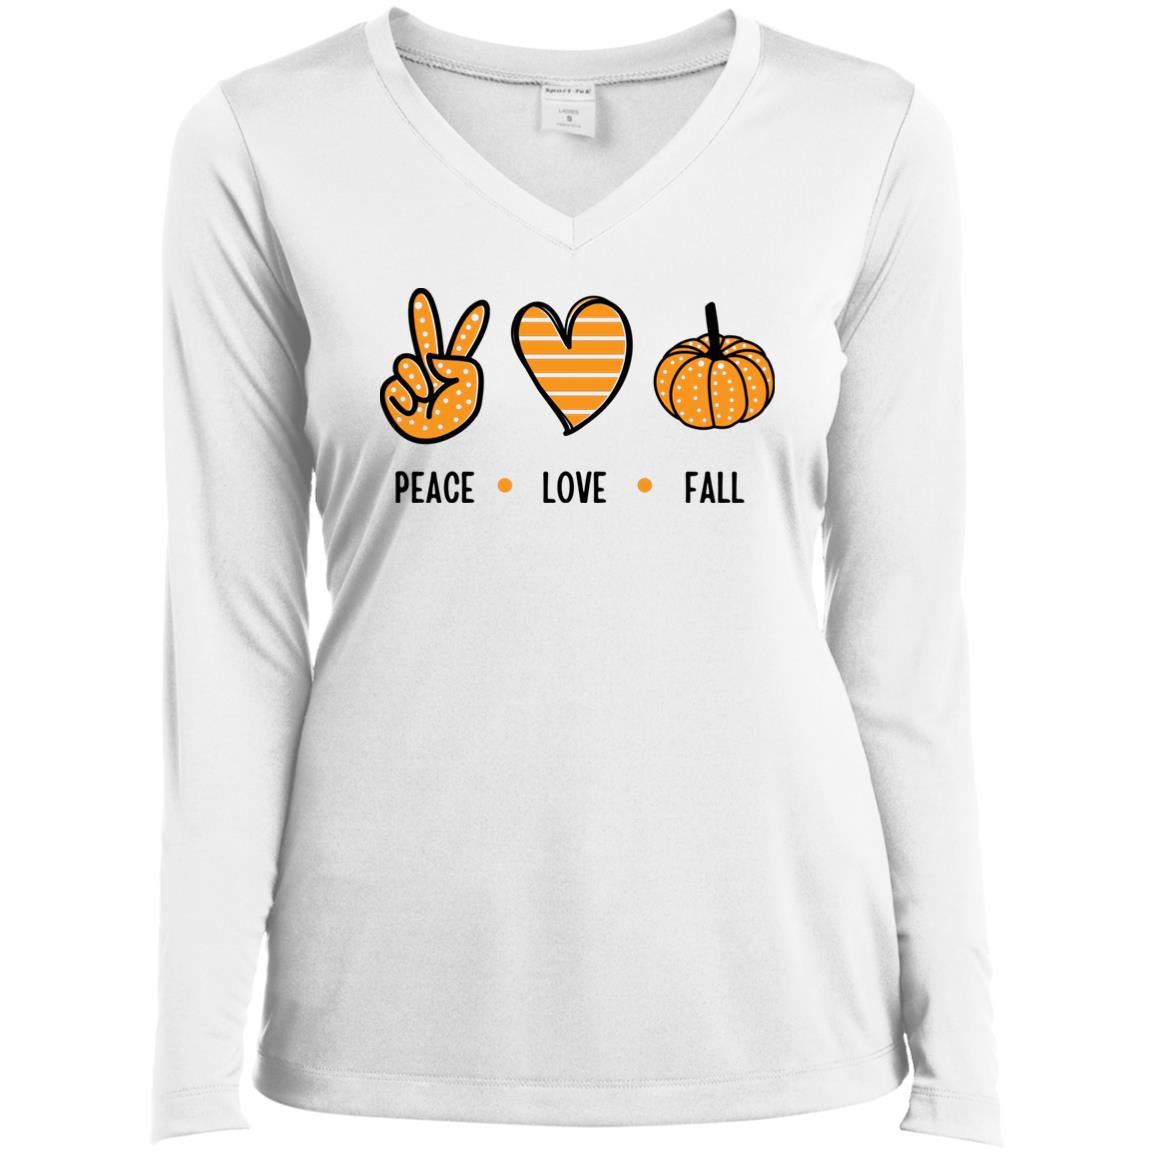 Peace, Love, Fall  T Shirt Peace, Love, Fall - Ladies’ Long Sleeve Performance V-Neck Tee